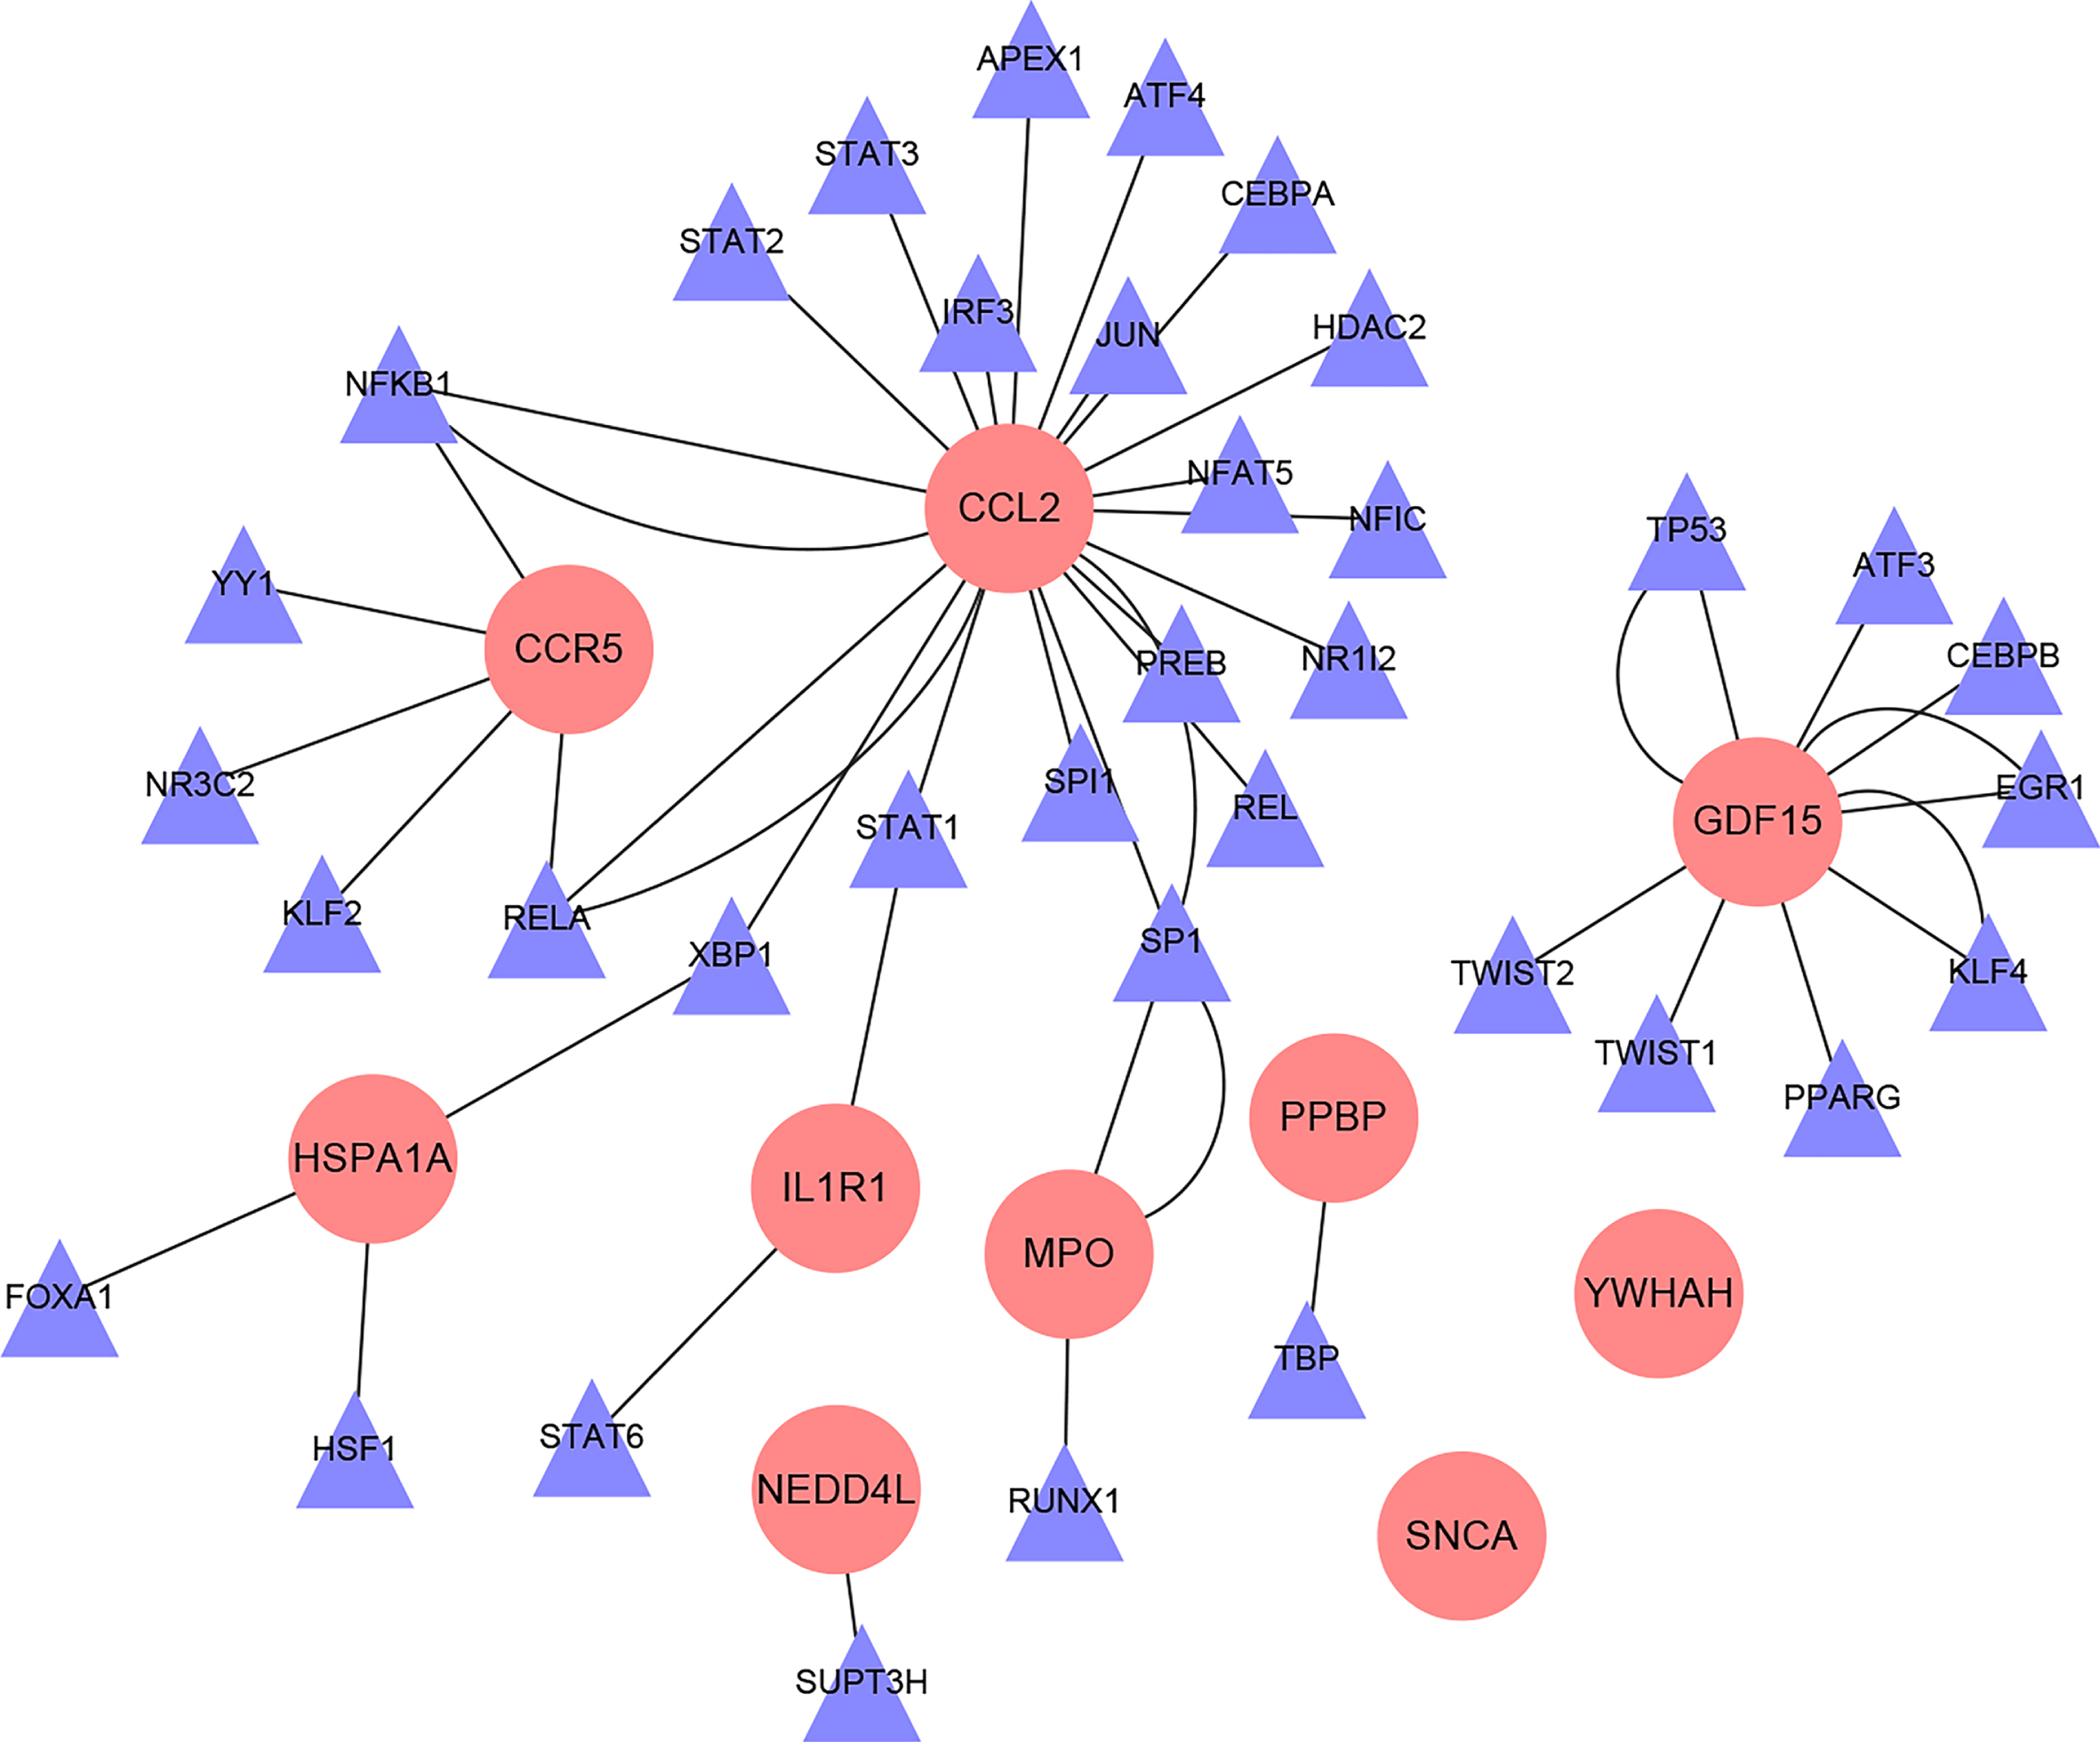 Interaction network diagram of hub gene-TFs (Pink circular nodes are hub genes; purple triangular nodes are transcription factors).